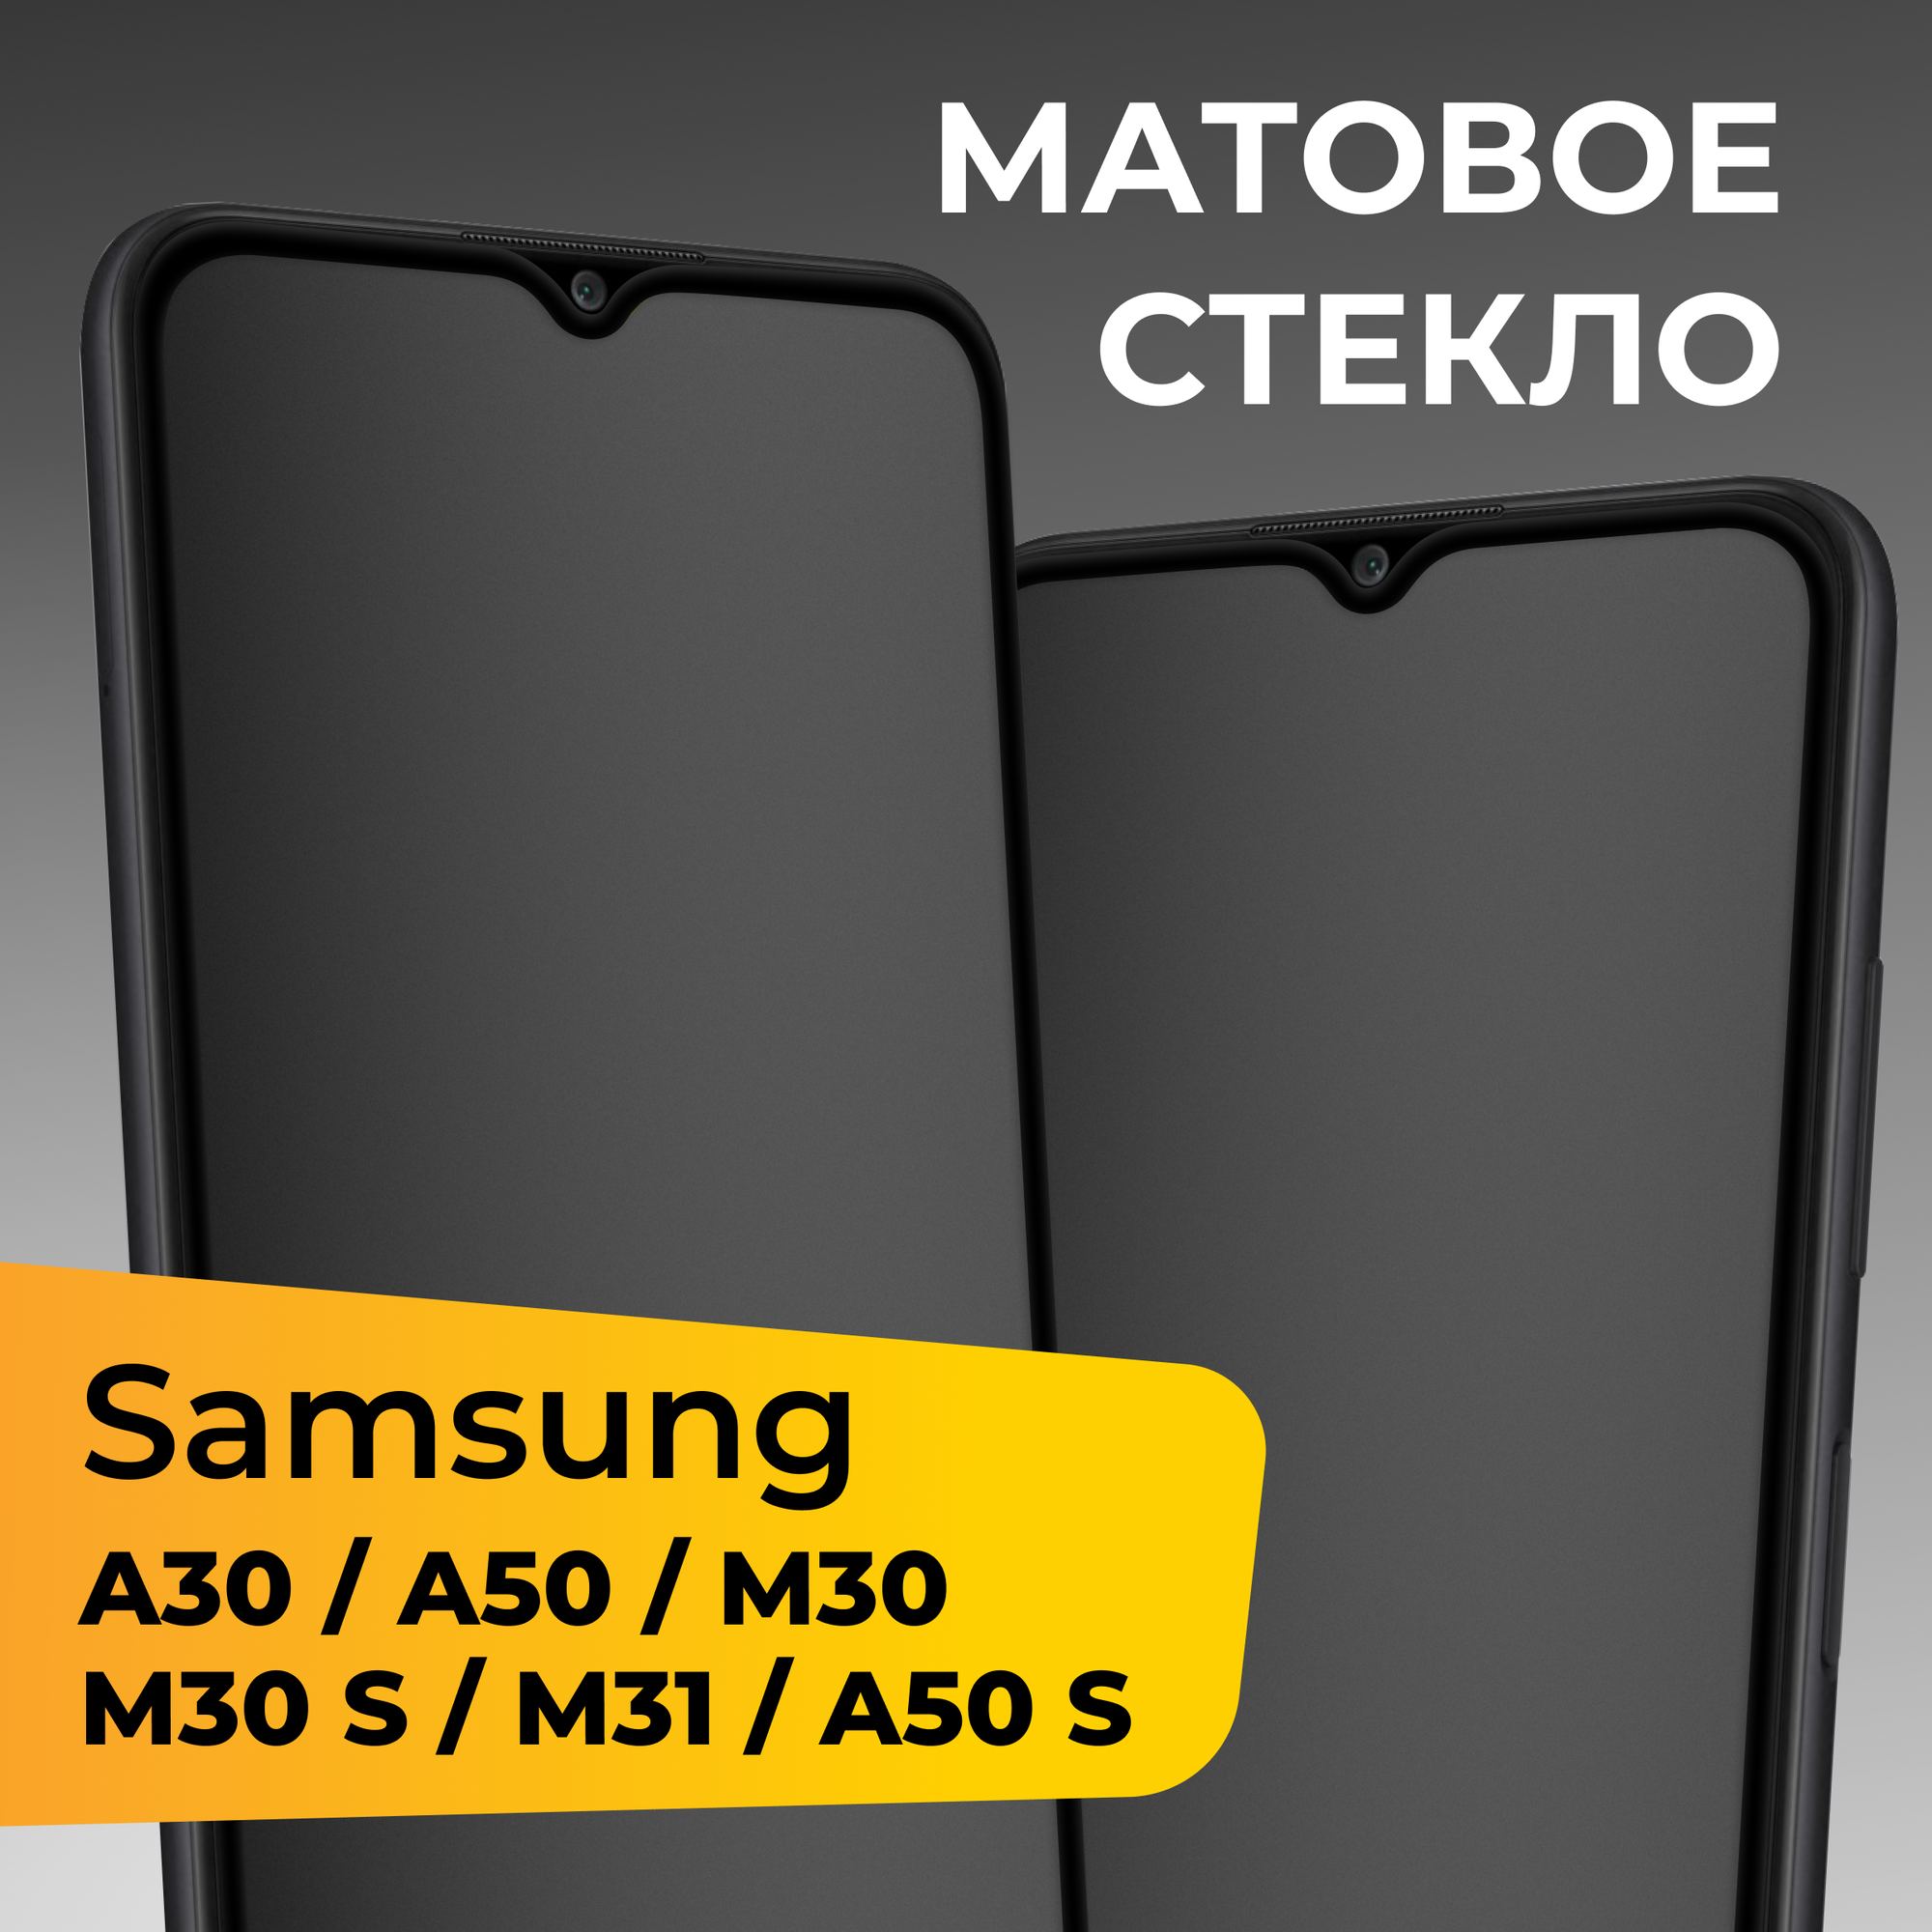 Матовое защитное стекло для телефона Samsung Galaxy A30, A50, M30, M30S, M31 и A50S / Стекло на Самсунг Галакси А30, А50, М30, М30С, М31 и А50С